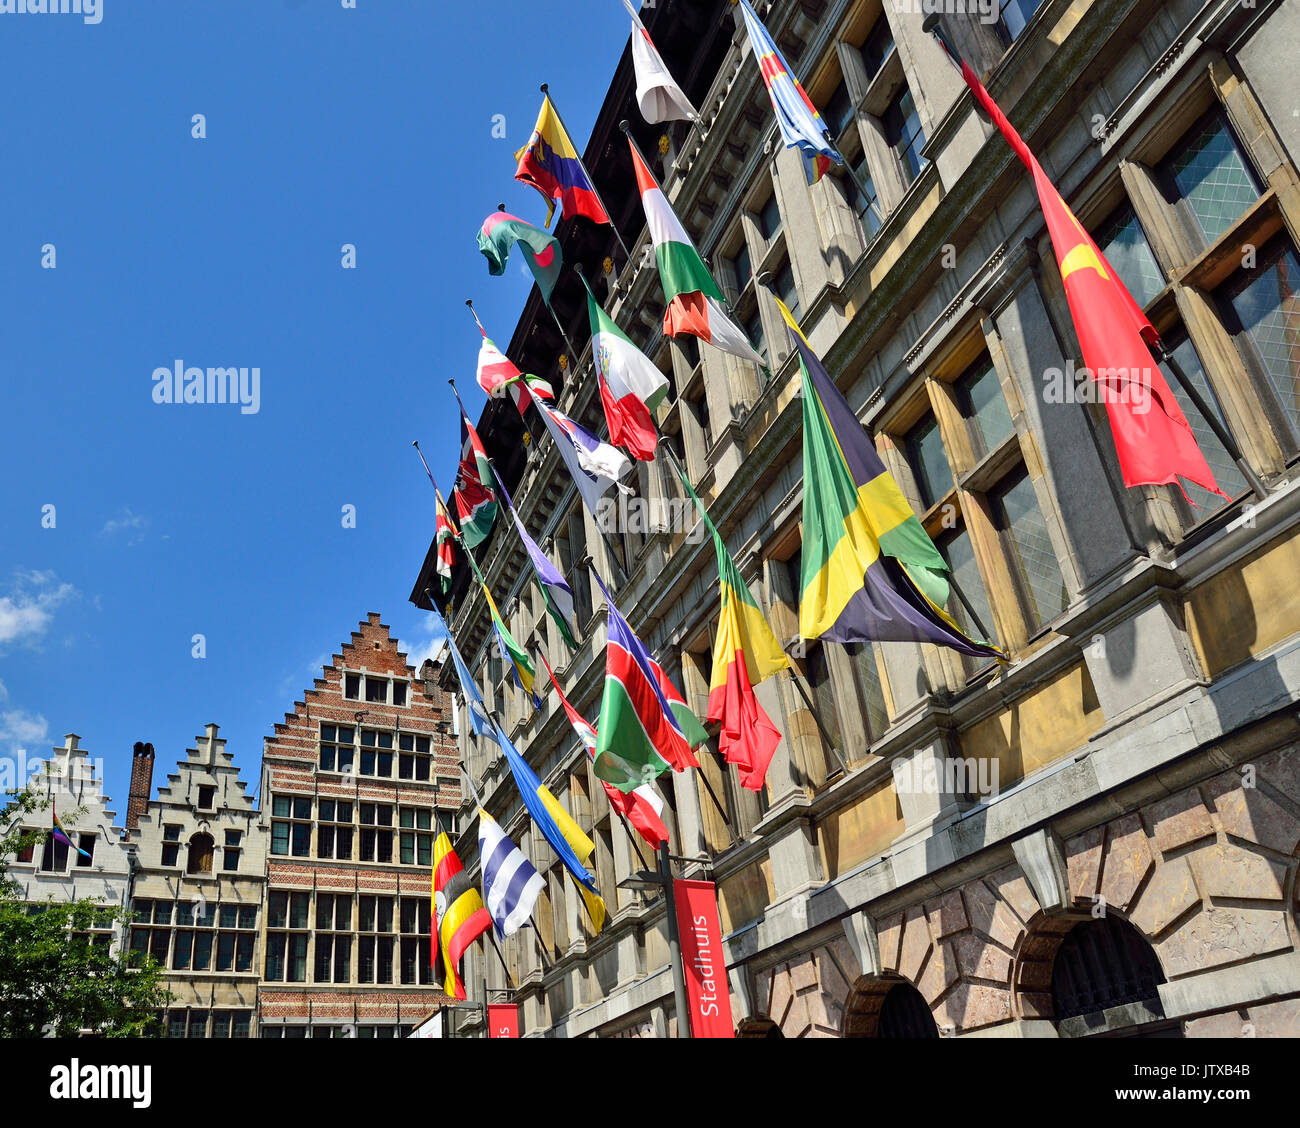 Antwerp / Antwerpen, Belgium. City Hall / Stadhuis (1565: Flemish Renaissance) in the Grote Markt (main square) Stock Photo